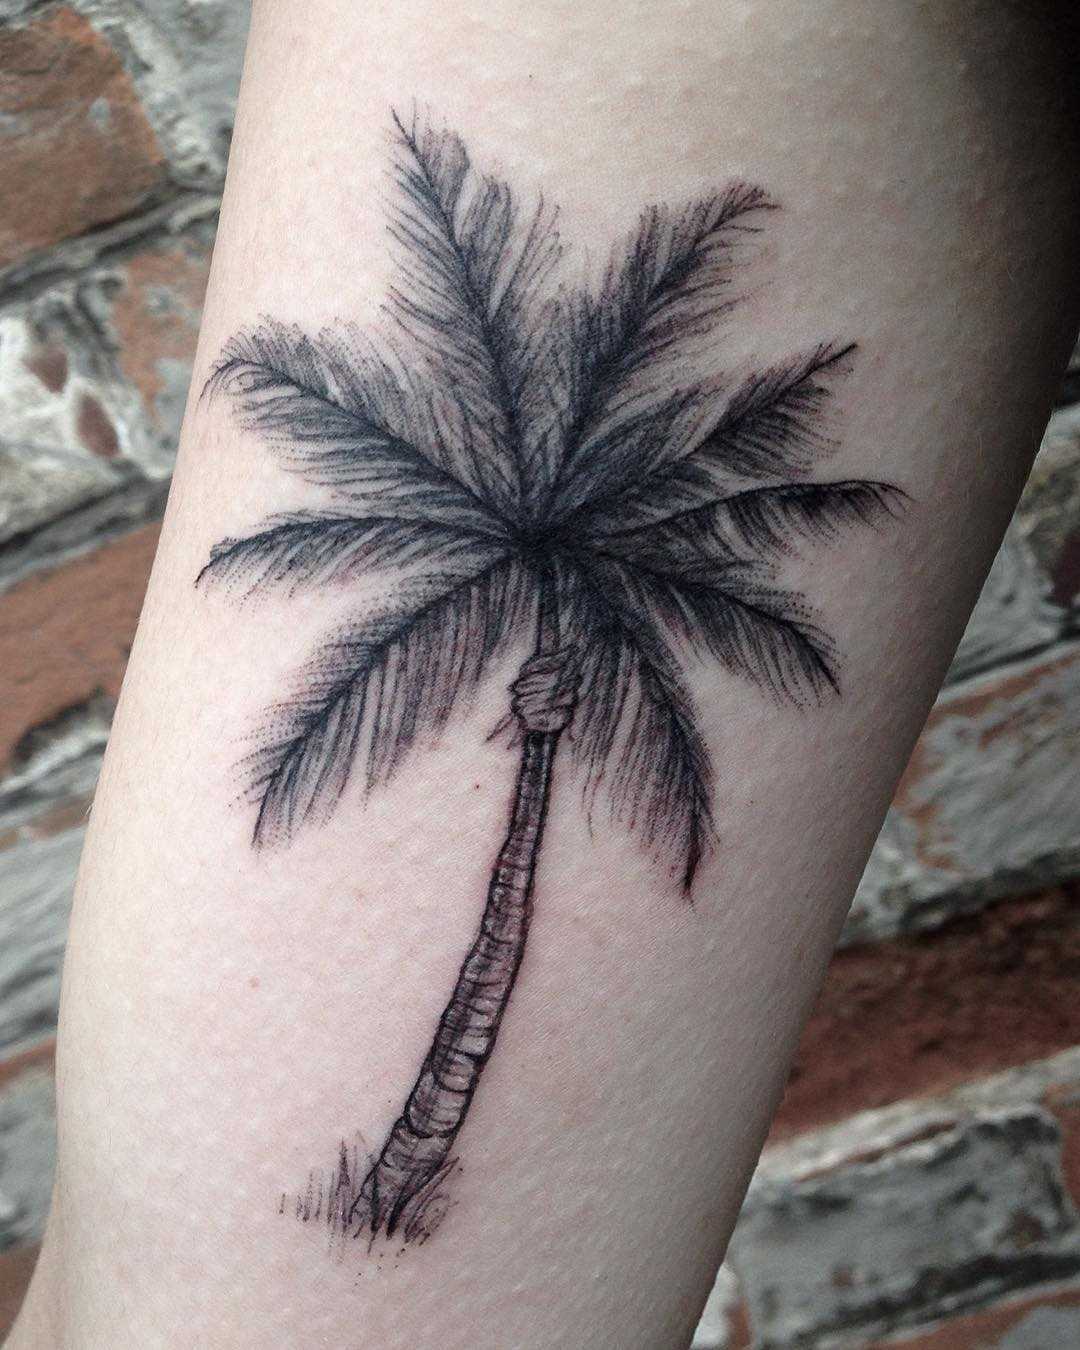 Simply Inked Palm Tree Temporary Tattoo, Designer Tattoo for Girls Boys Men  Women waterproof Sticker Size: 2.5 X 4 inch 1pc. l Black l 2g : Amazon.in:  Beauty